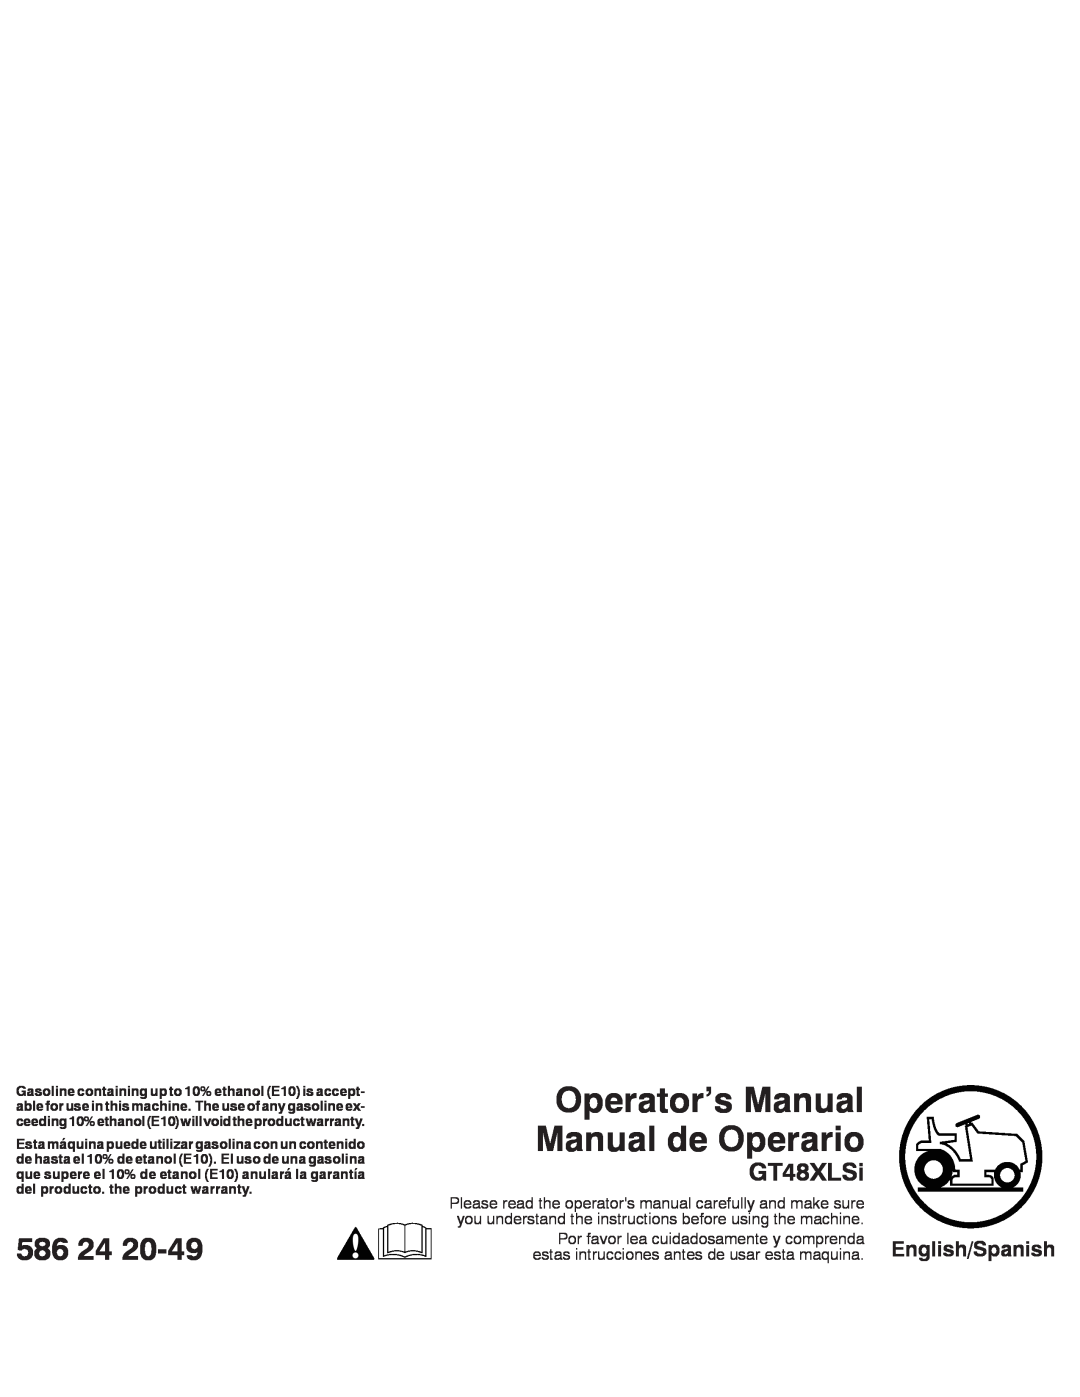 Husqvarna GT48XLSi warranty 586 24, English/Spanish, Operator’s Manual Manual de Operario 